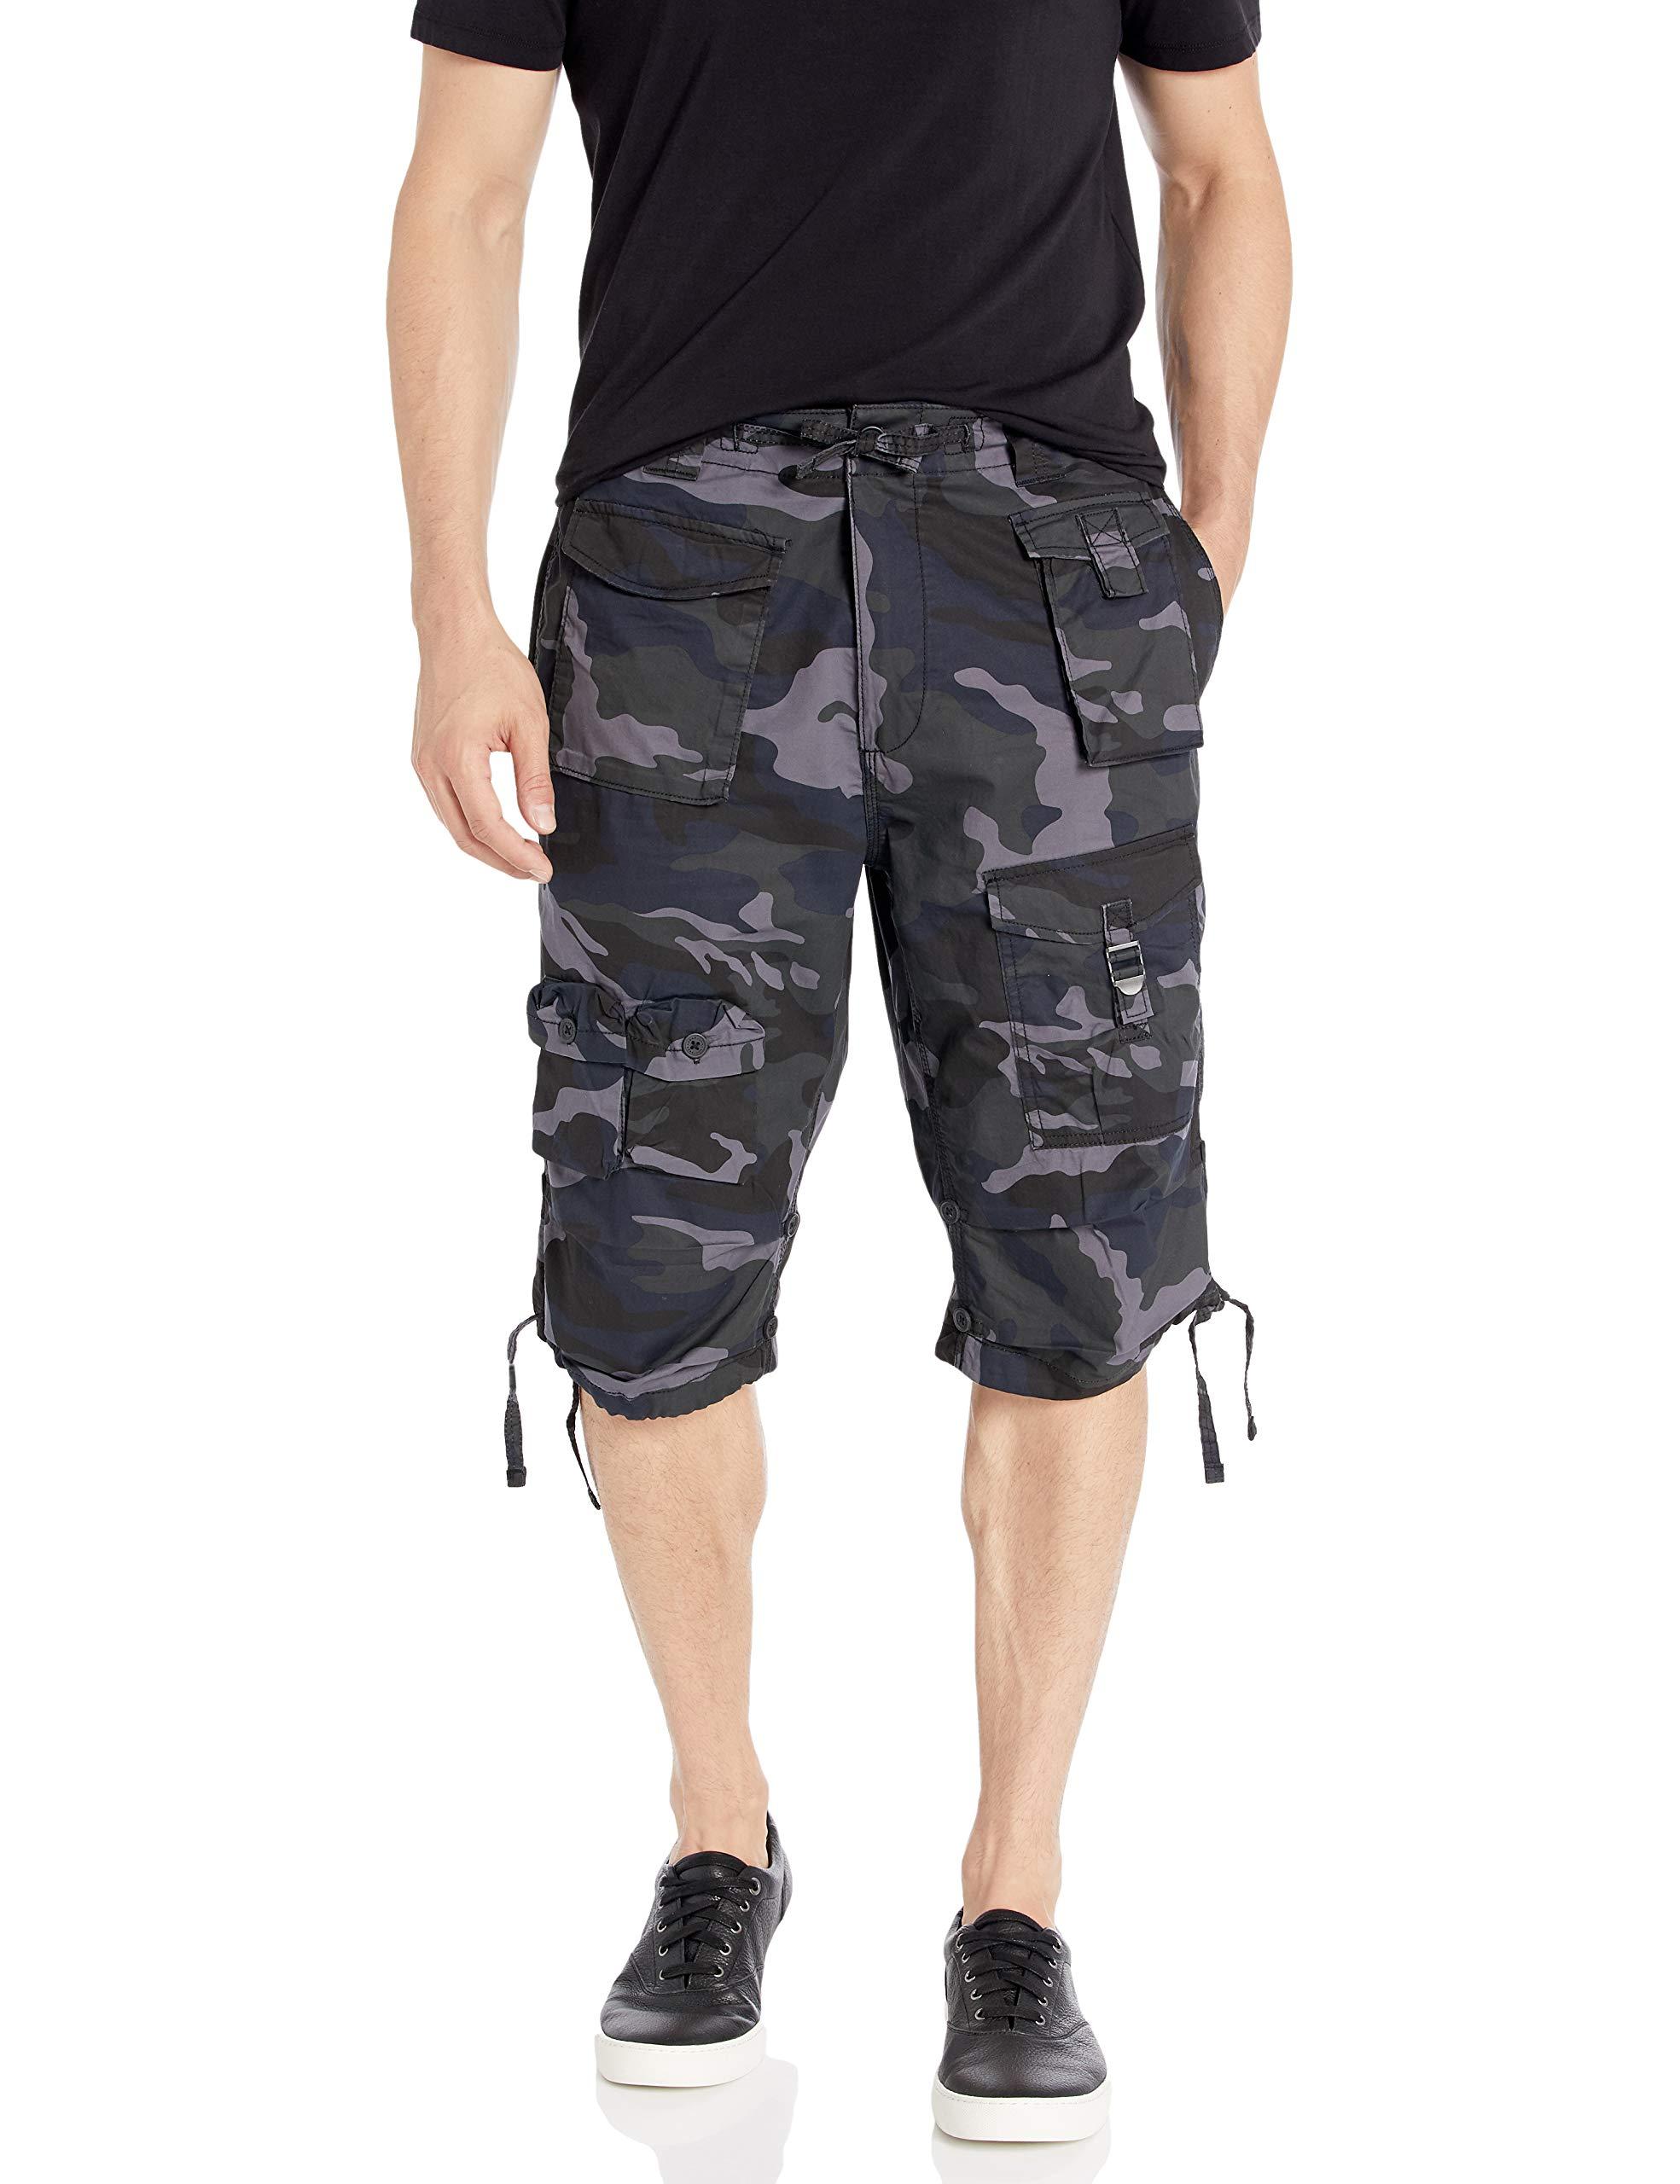 Hakjay Black Long Cargo Shorts for Men Size 40